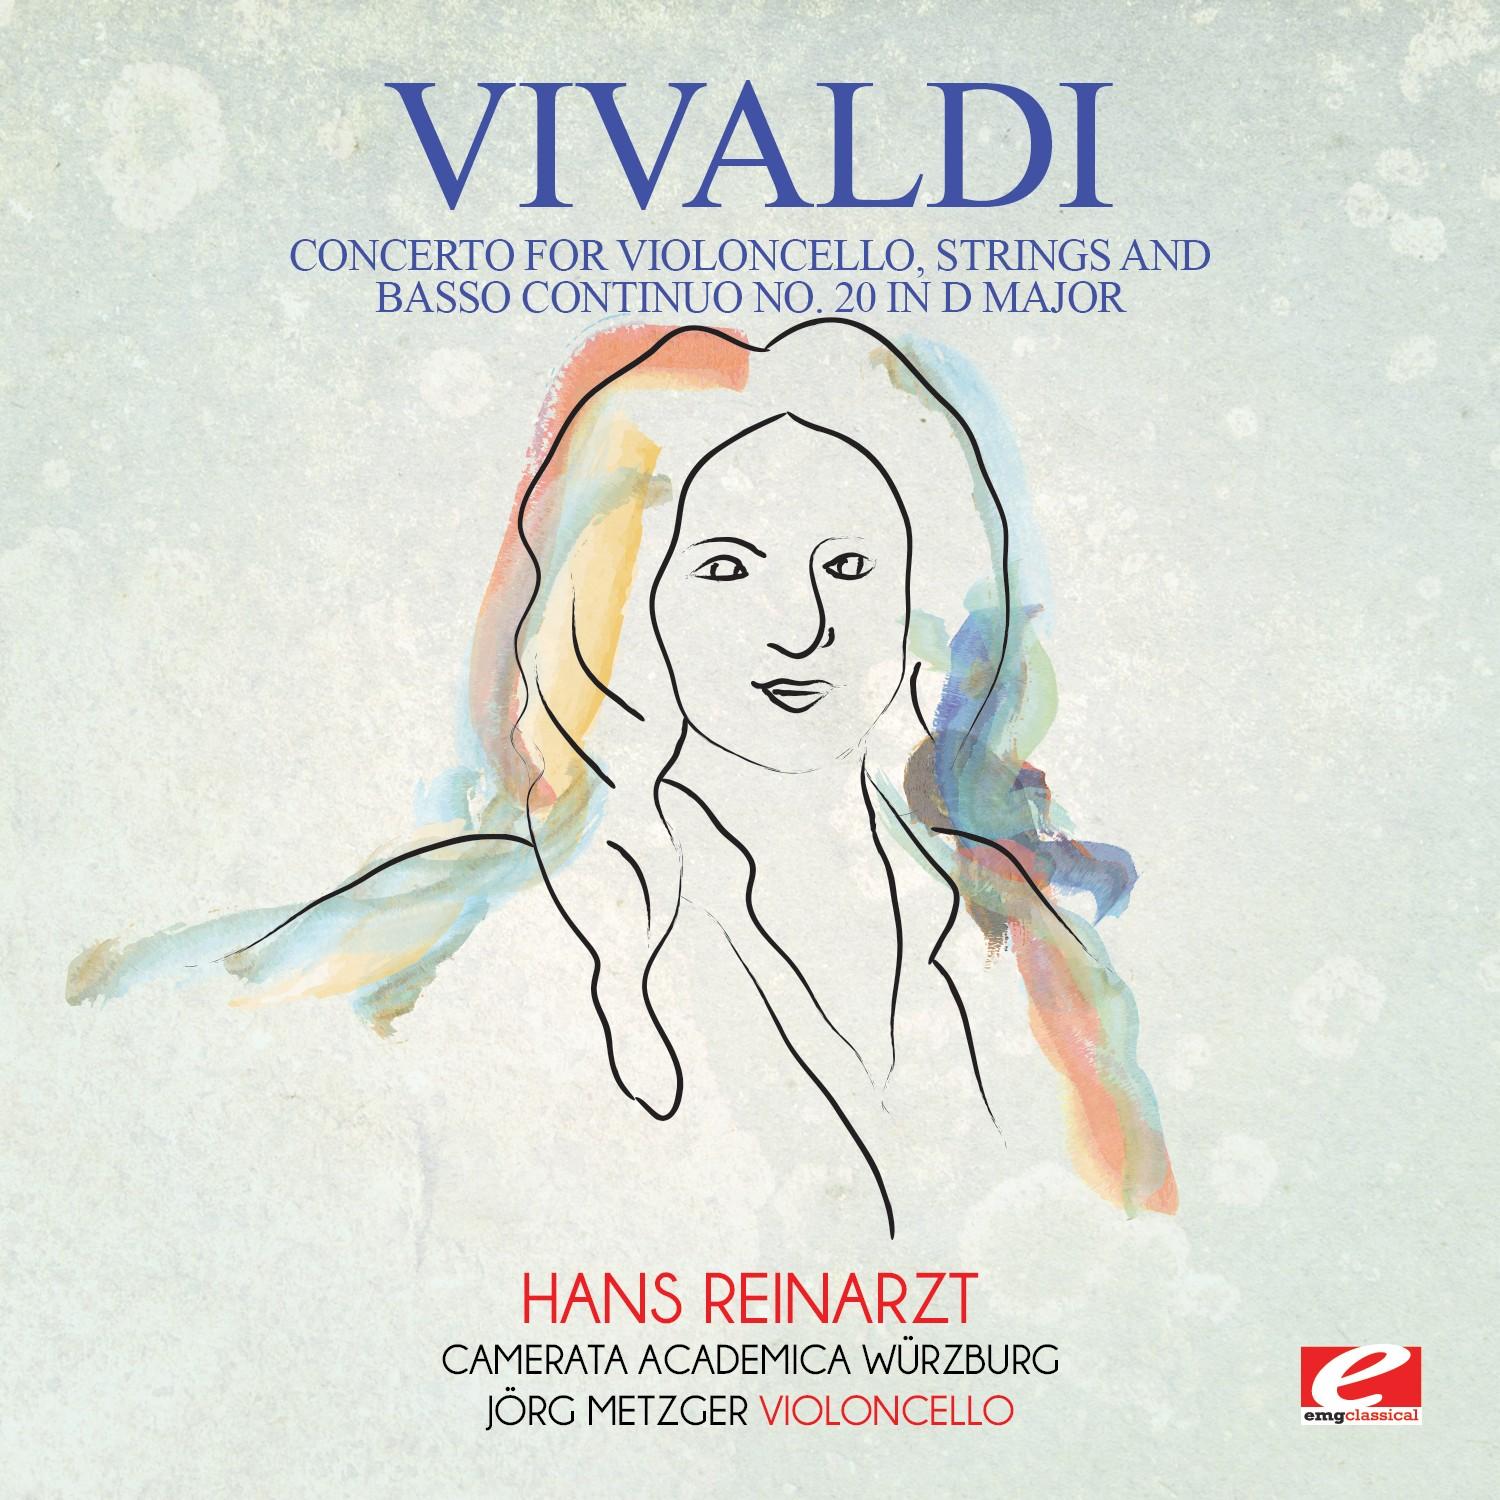 Vivaldi: Concerto for Violoncello, Strings and Basso Continuo No. 20 in D Major, RV 404 (Digitally Remastered)